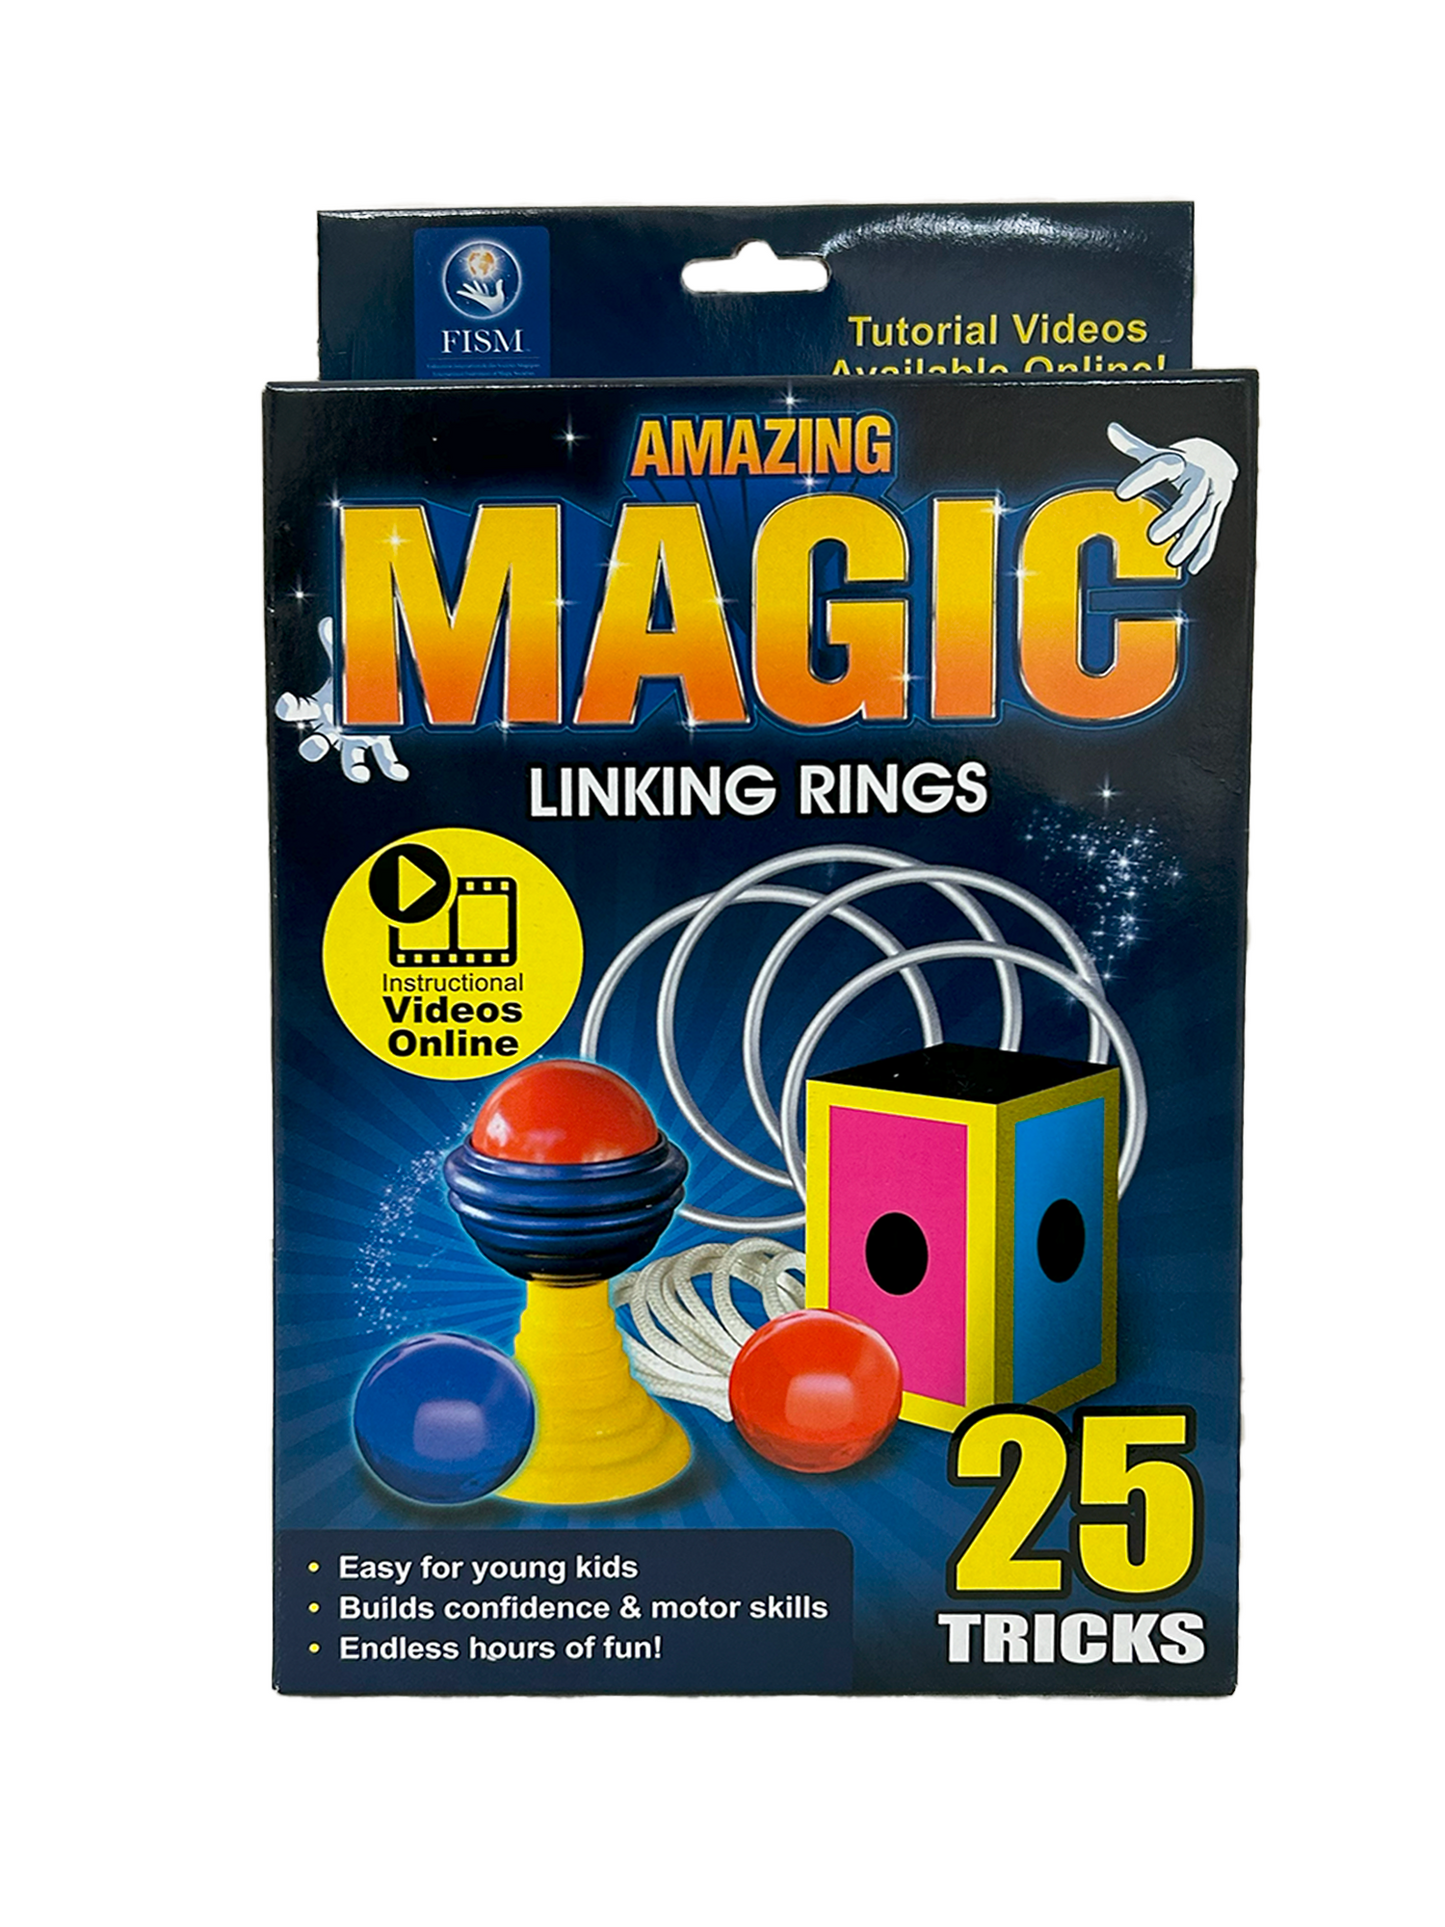 It's Magic Magic Pocket Tricks: Linking Rings